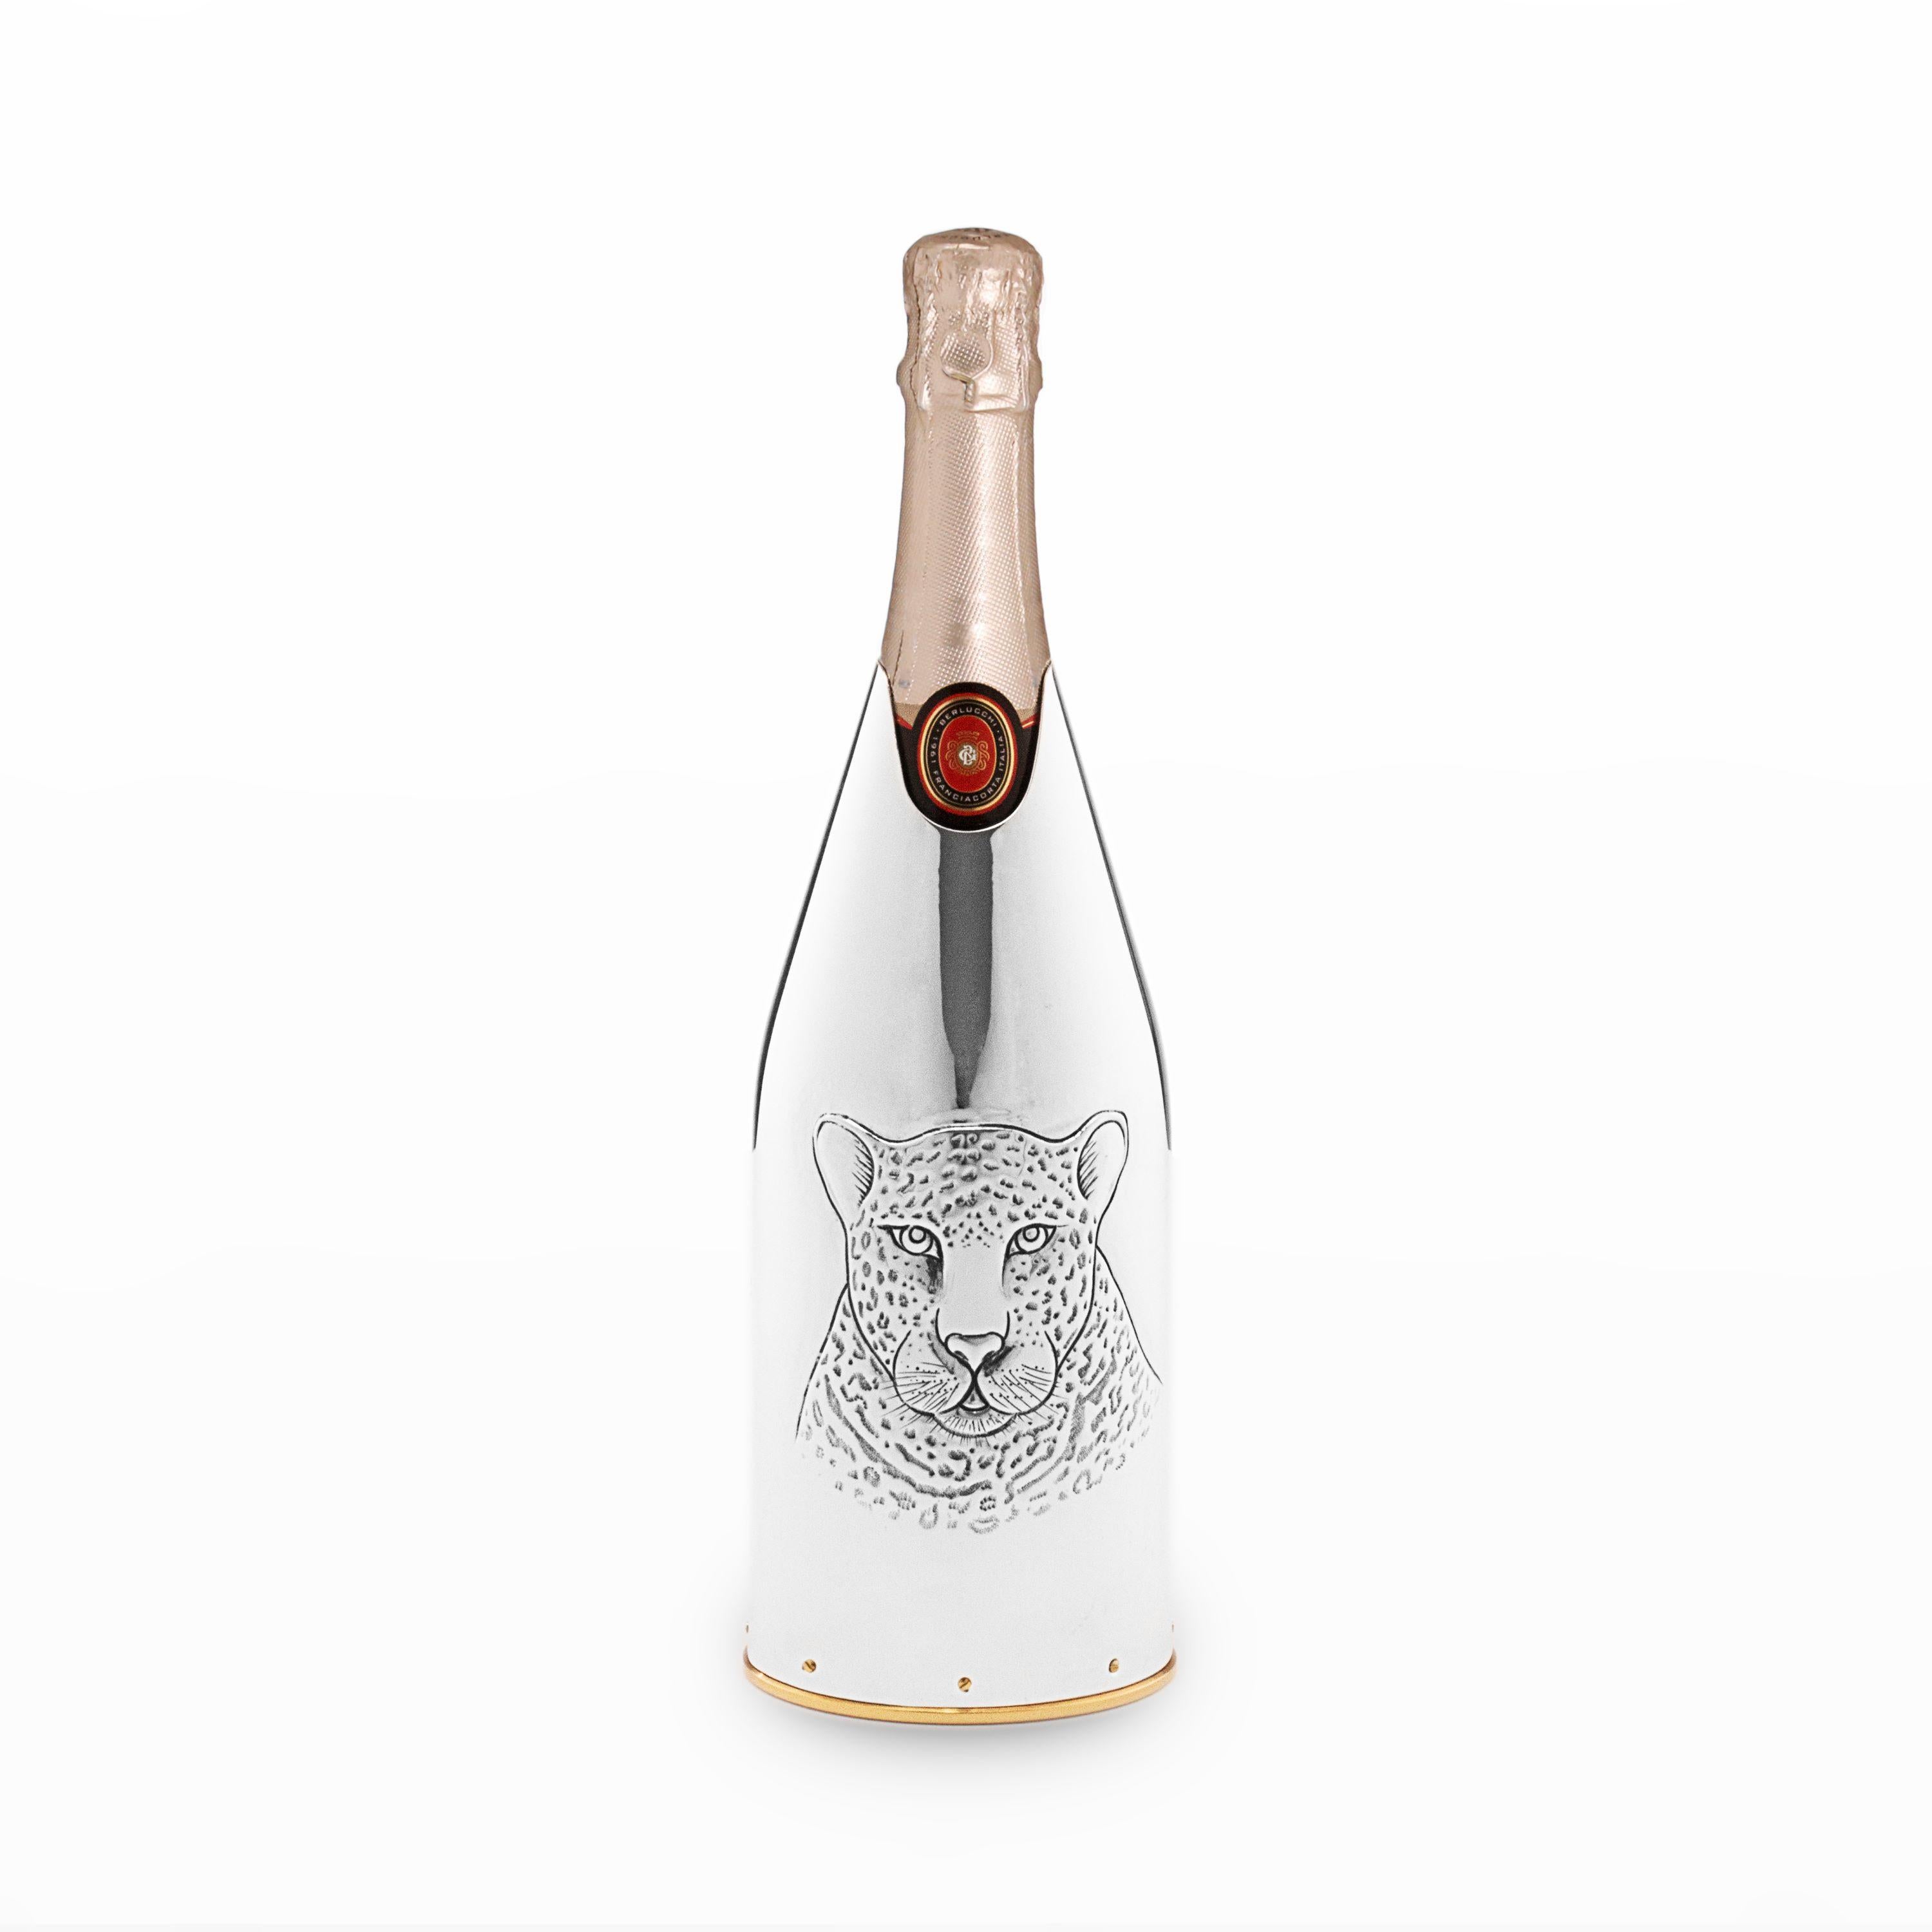 Tribal K-OVER Champagne, SAFARI, silver 999/°°, Italy For Sale